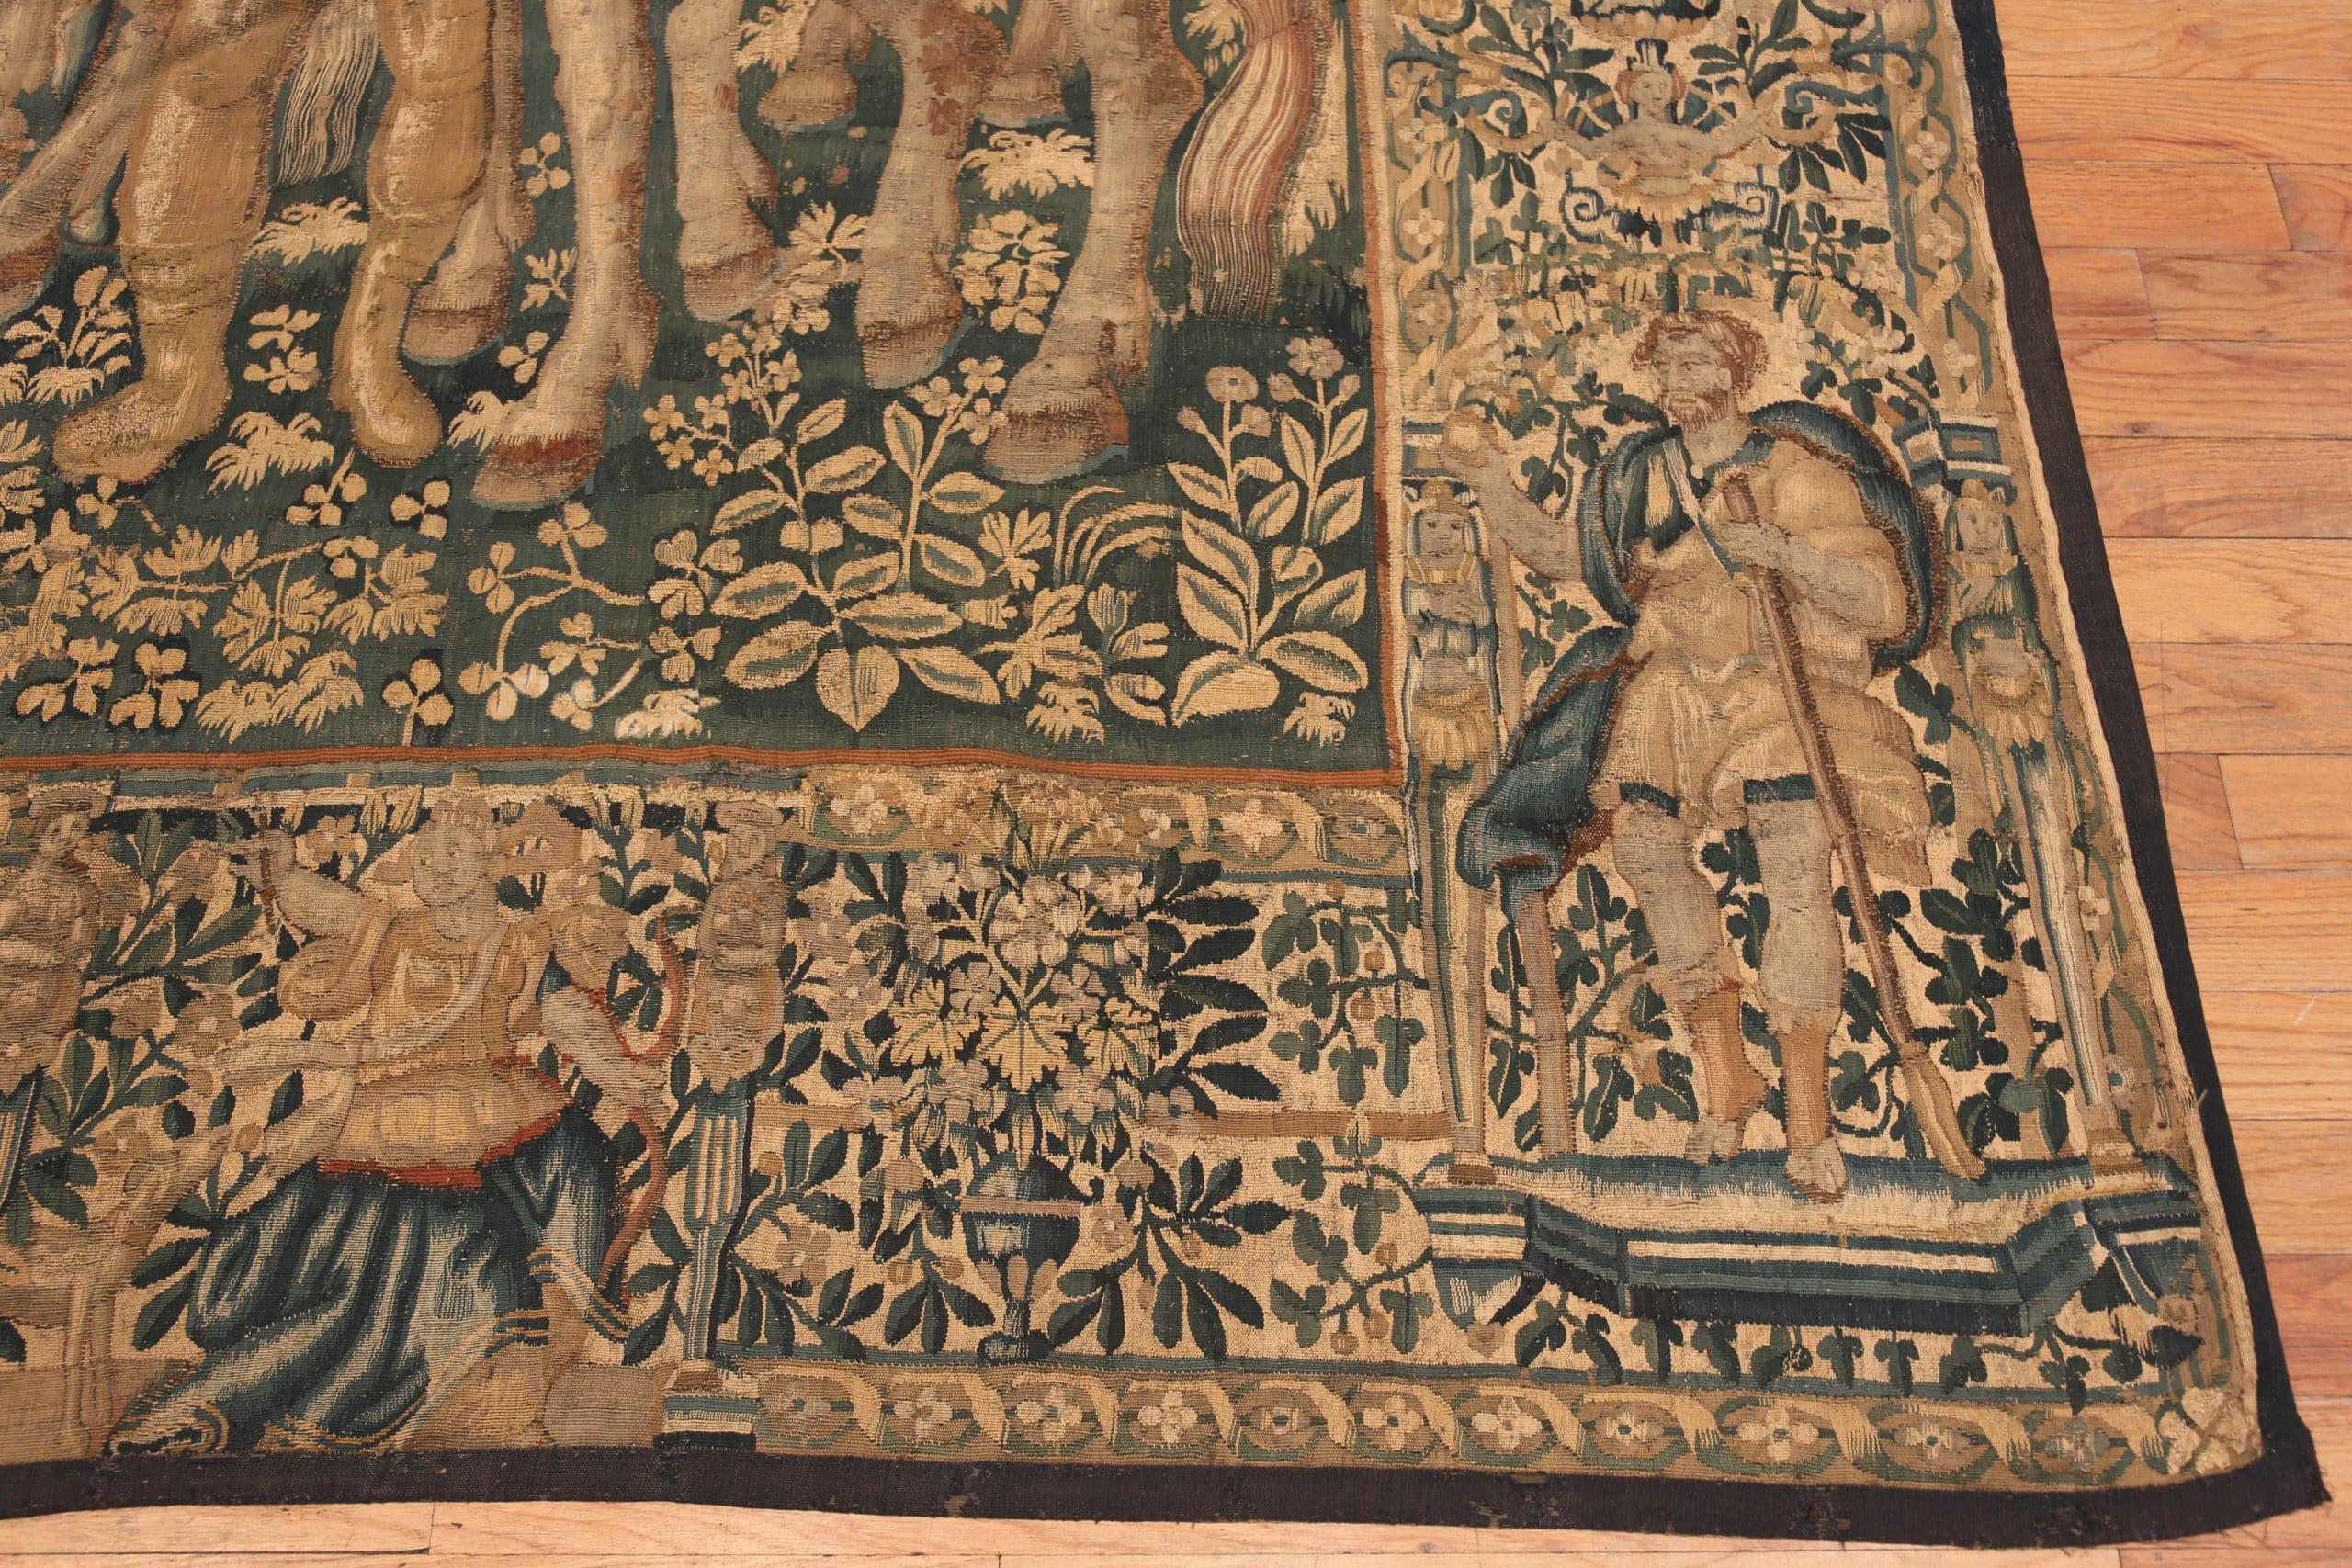 16th Century Antique Flemish King Solomon Tapestry, Country Of Origin: Belgium, Circa Date: 16th Century. Size: 11 ft 4 in x 12 ft 10 in (3.45 m x 3.91 m)

